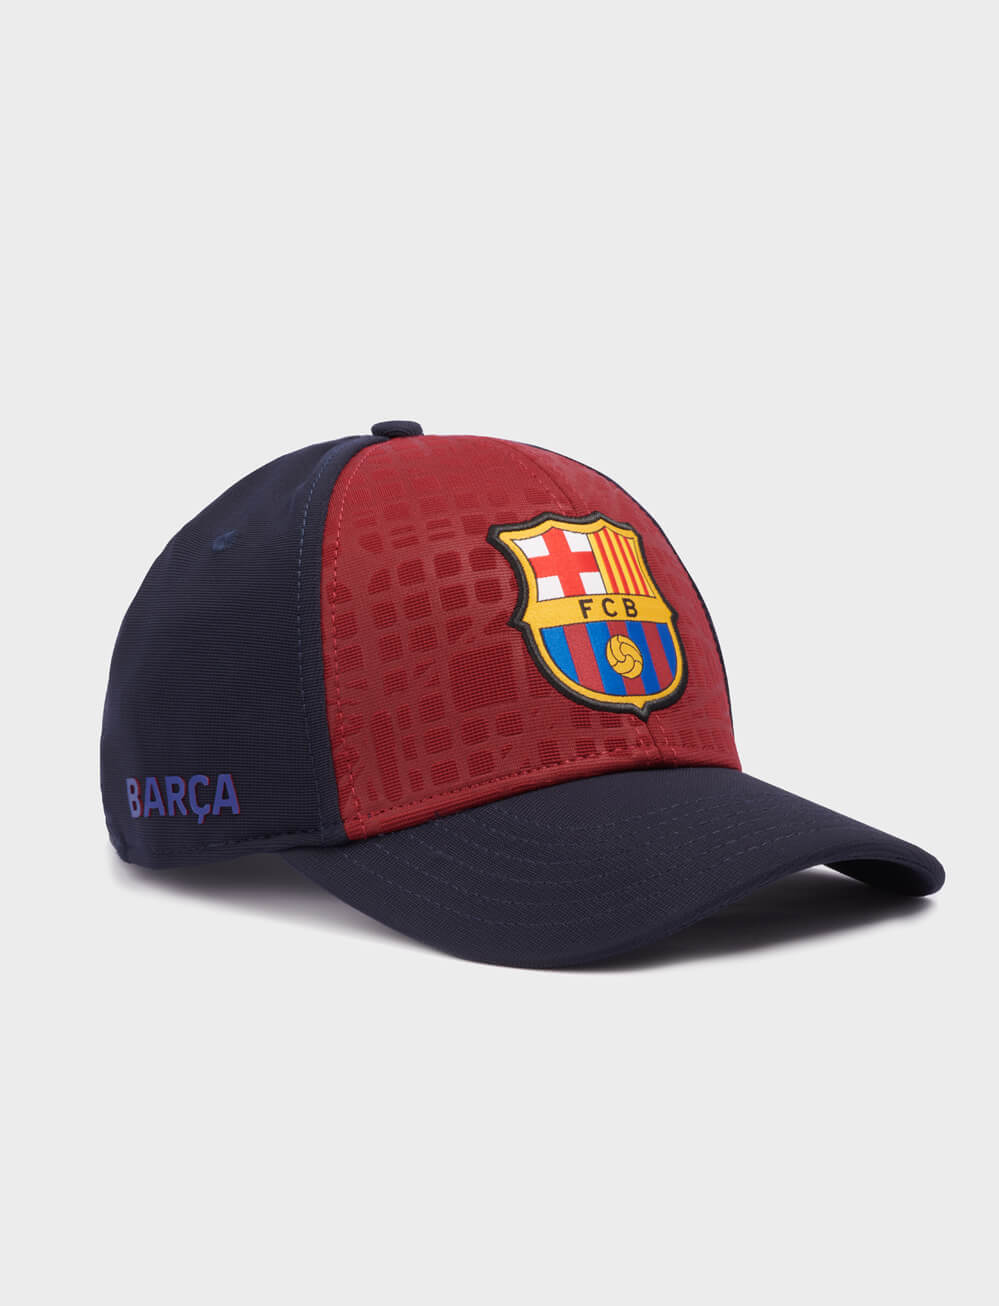 Official FC Barcelona Cap - Navy/Burgandy - The World Football Store